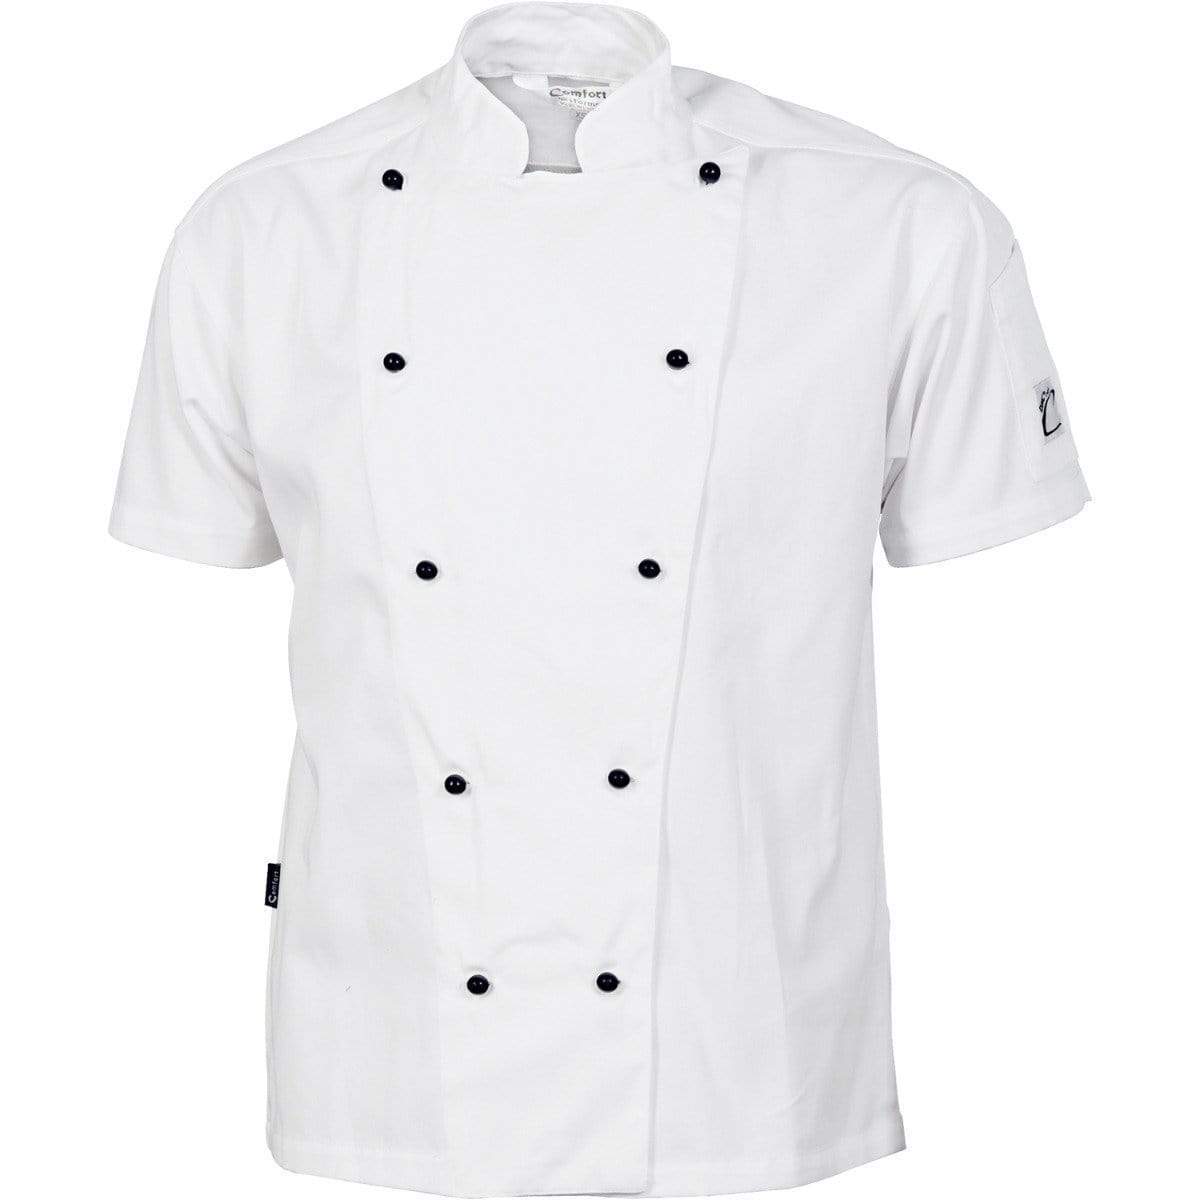 Dnc Workwear Traditional Short Sleeve Chef Jacket -1101 Hospitality & Chefwear DNC Workwear White XXS 